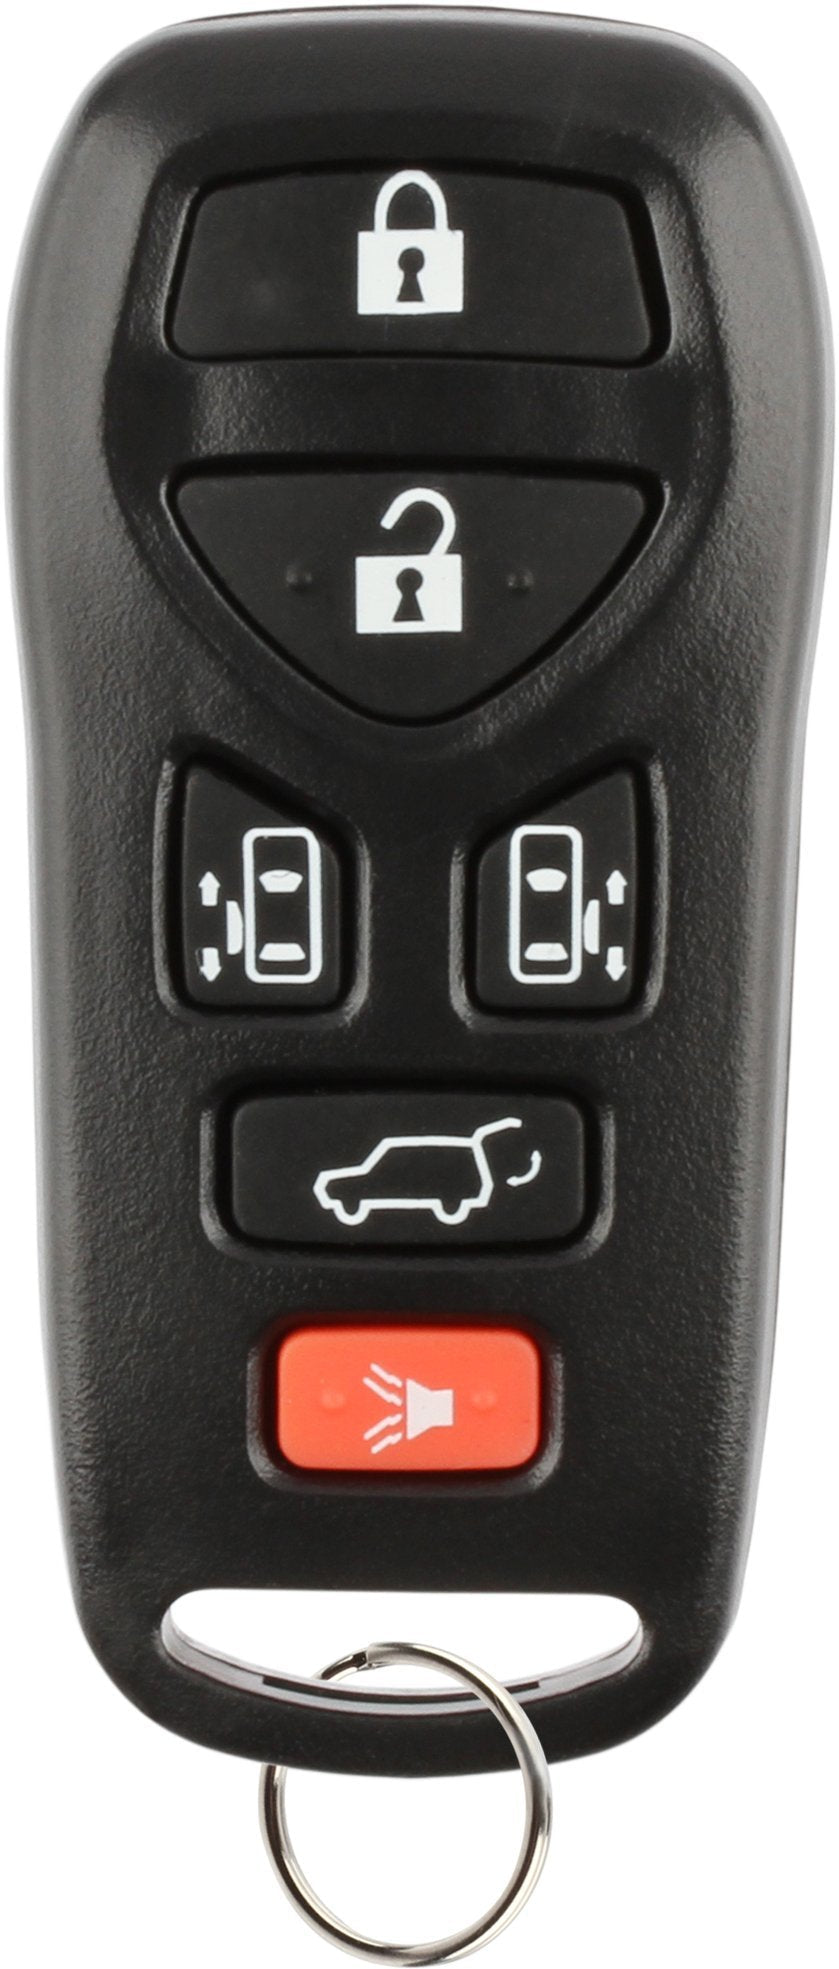  [AUSTRALIA] - Discount Keyless Entry Remote Control Replacement Car Key Fob For Nissan Quest KBRASTU51 Single